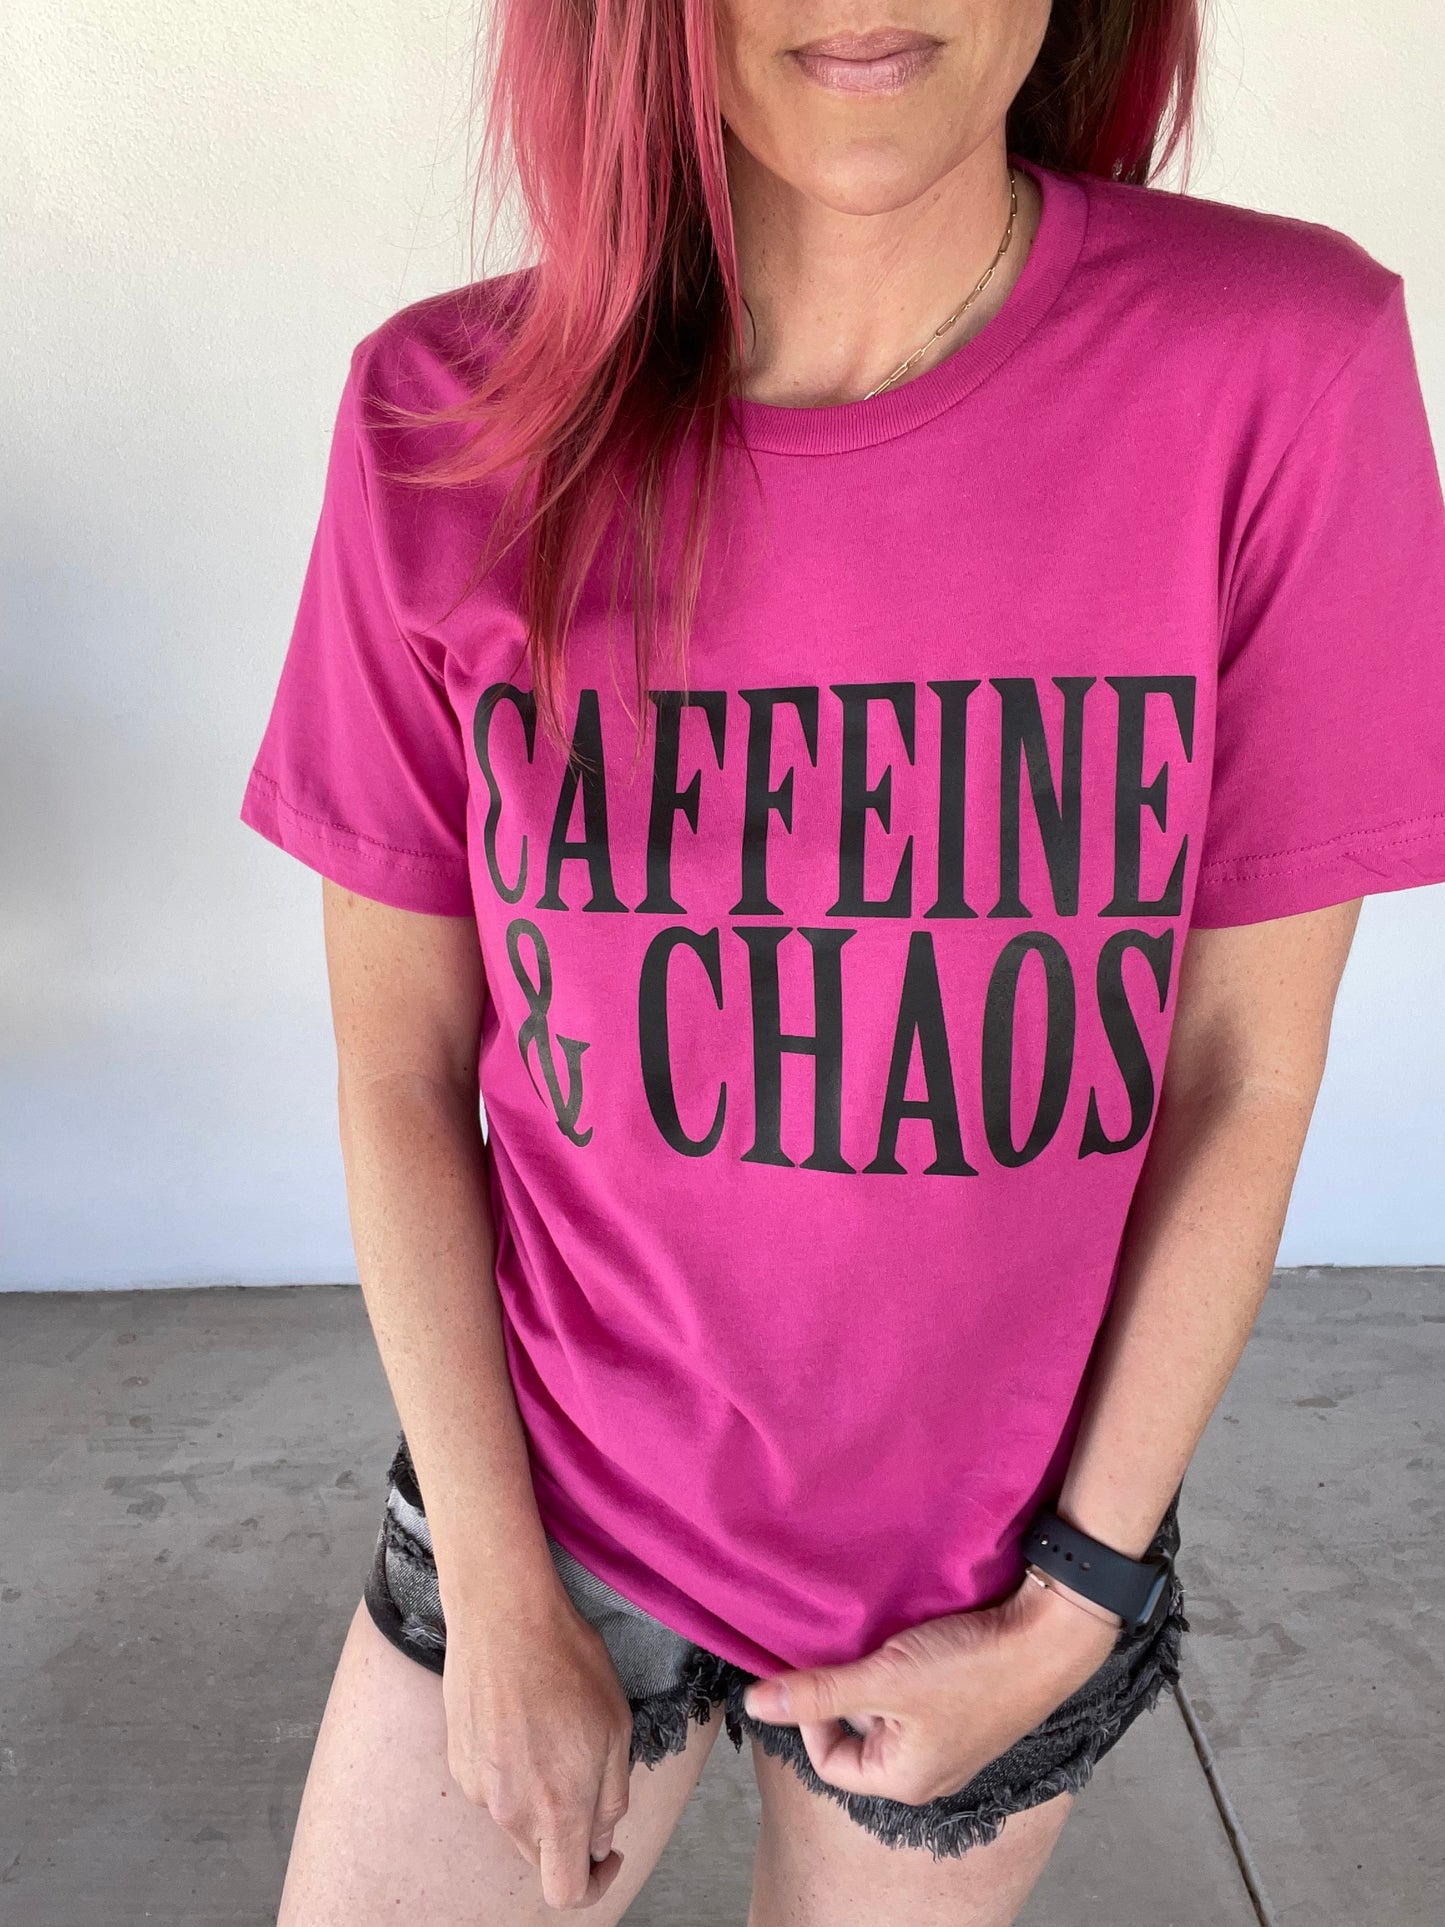 The Caffeine & Chaos Tee